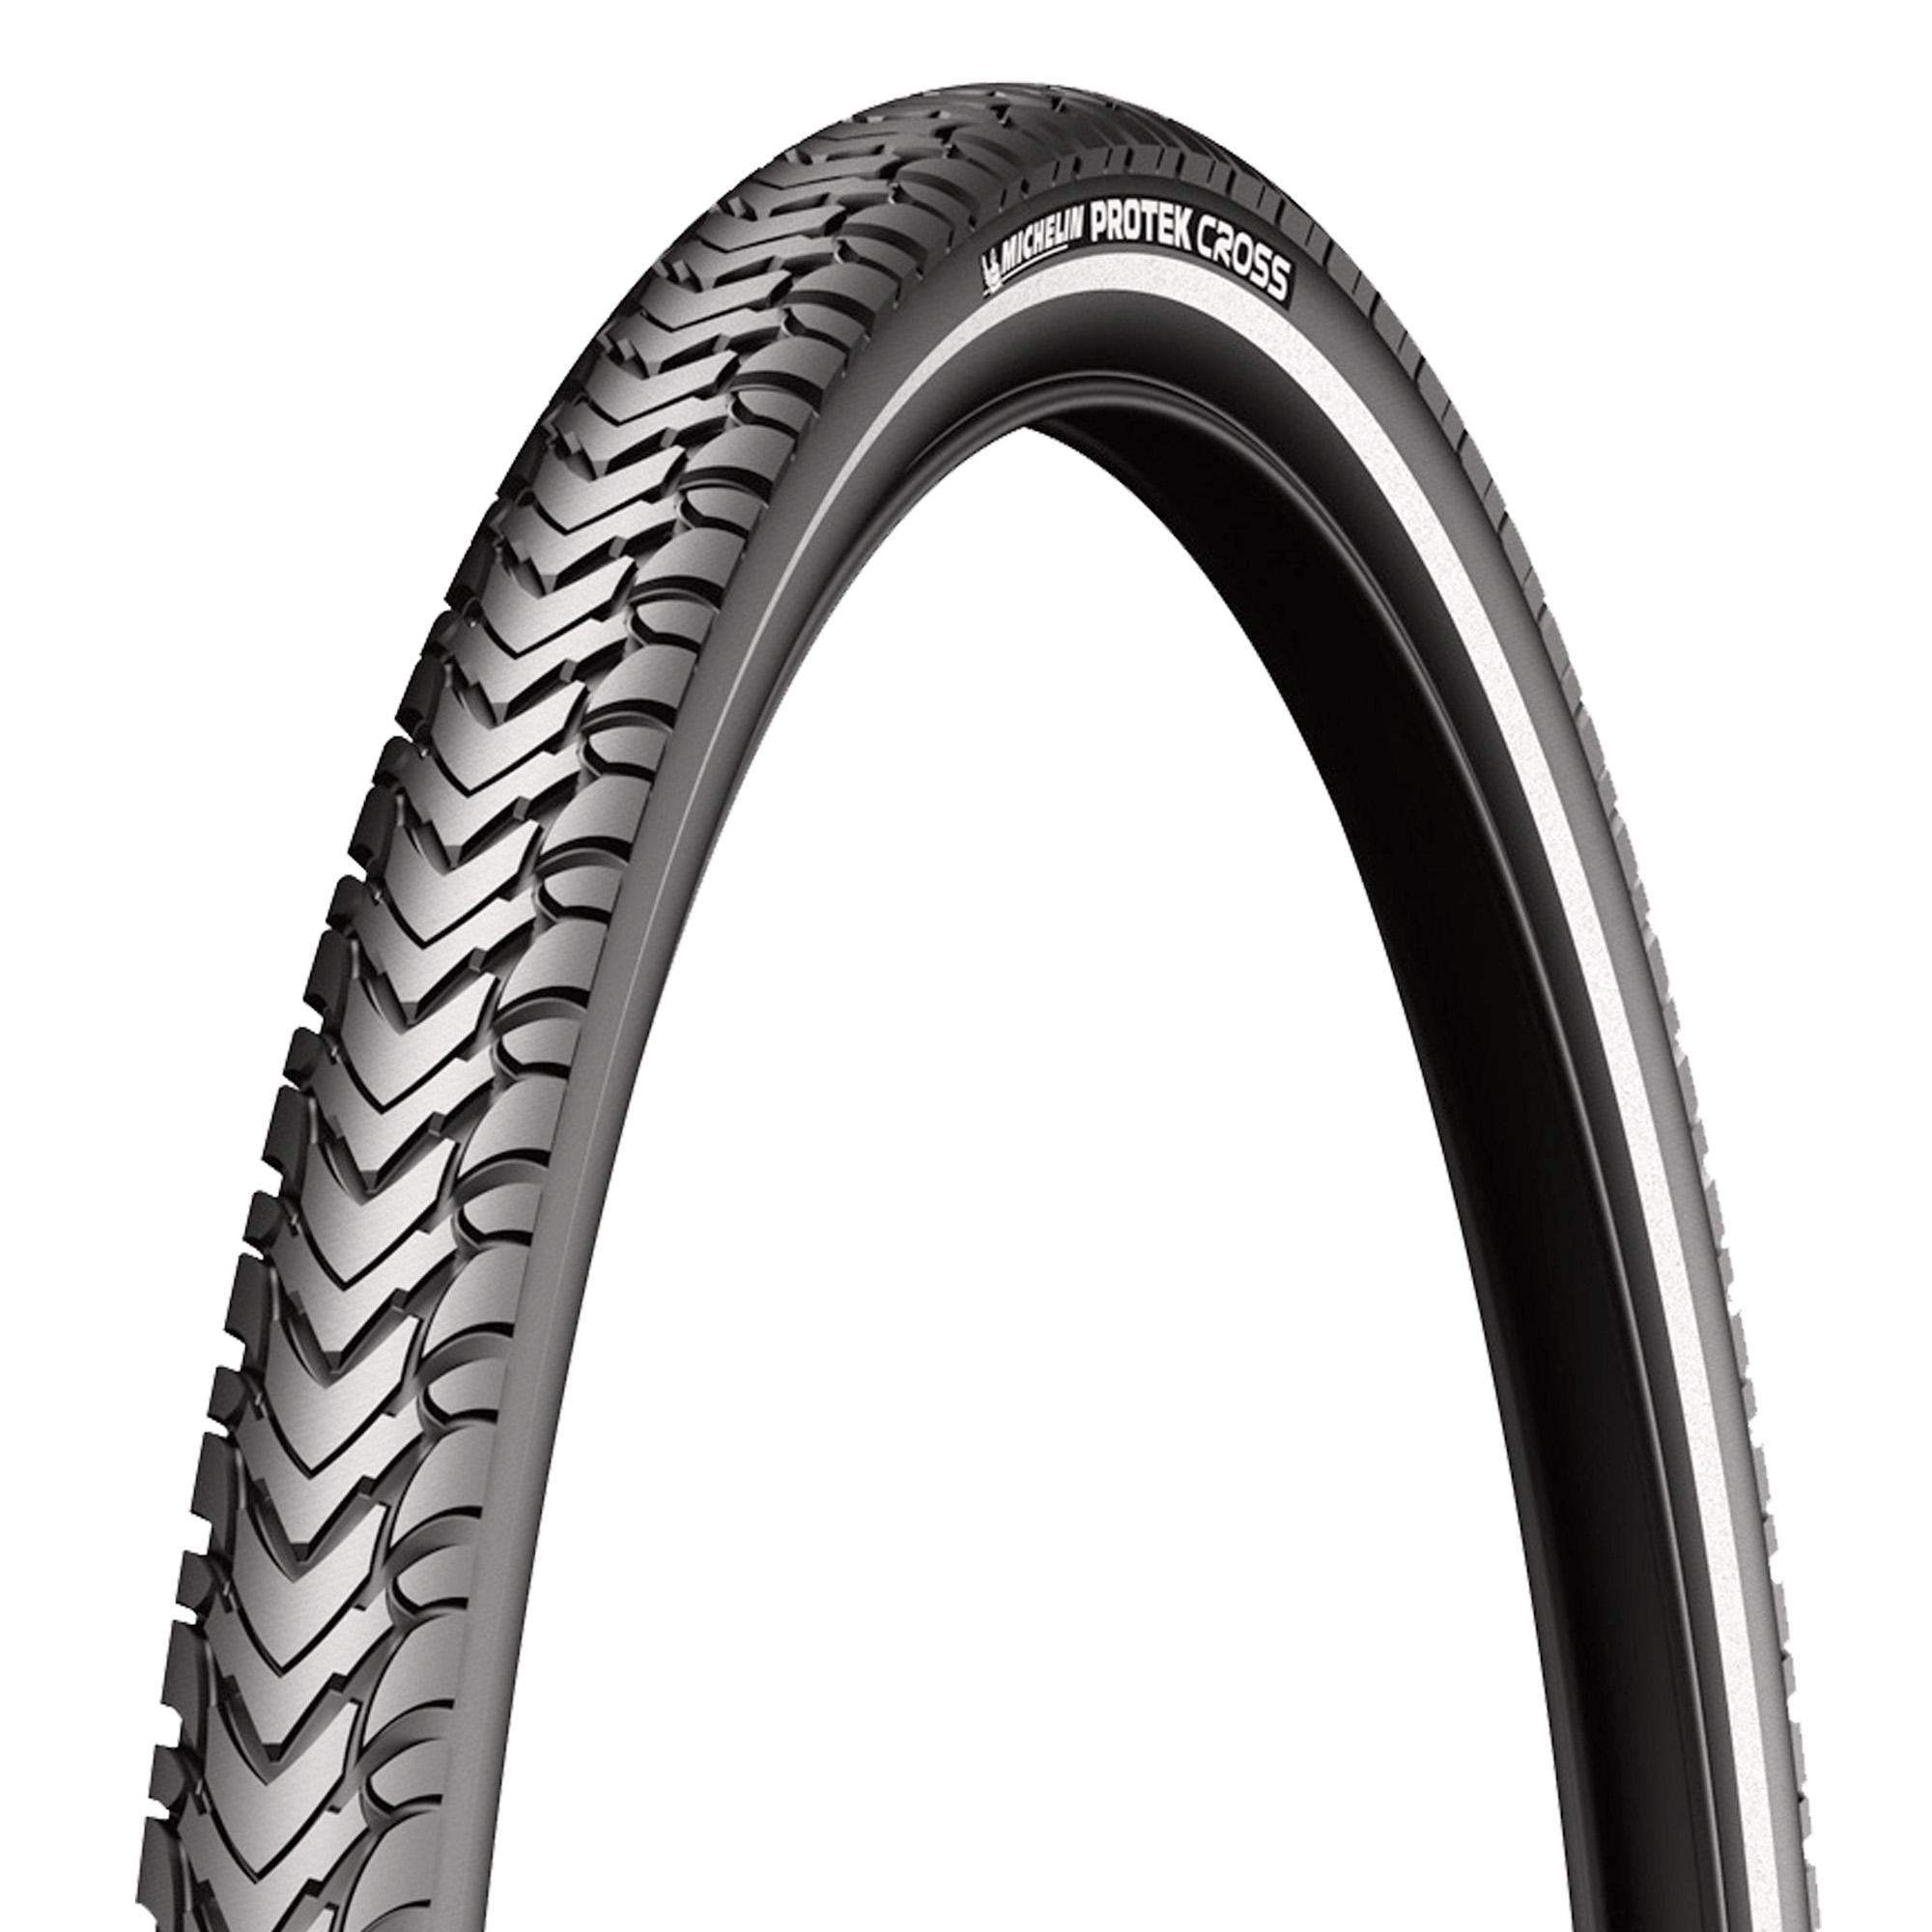 700c Bike Clincher Tyre Michelin Protek Cross Wire 700x35c Black/Reflective